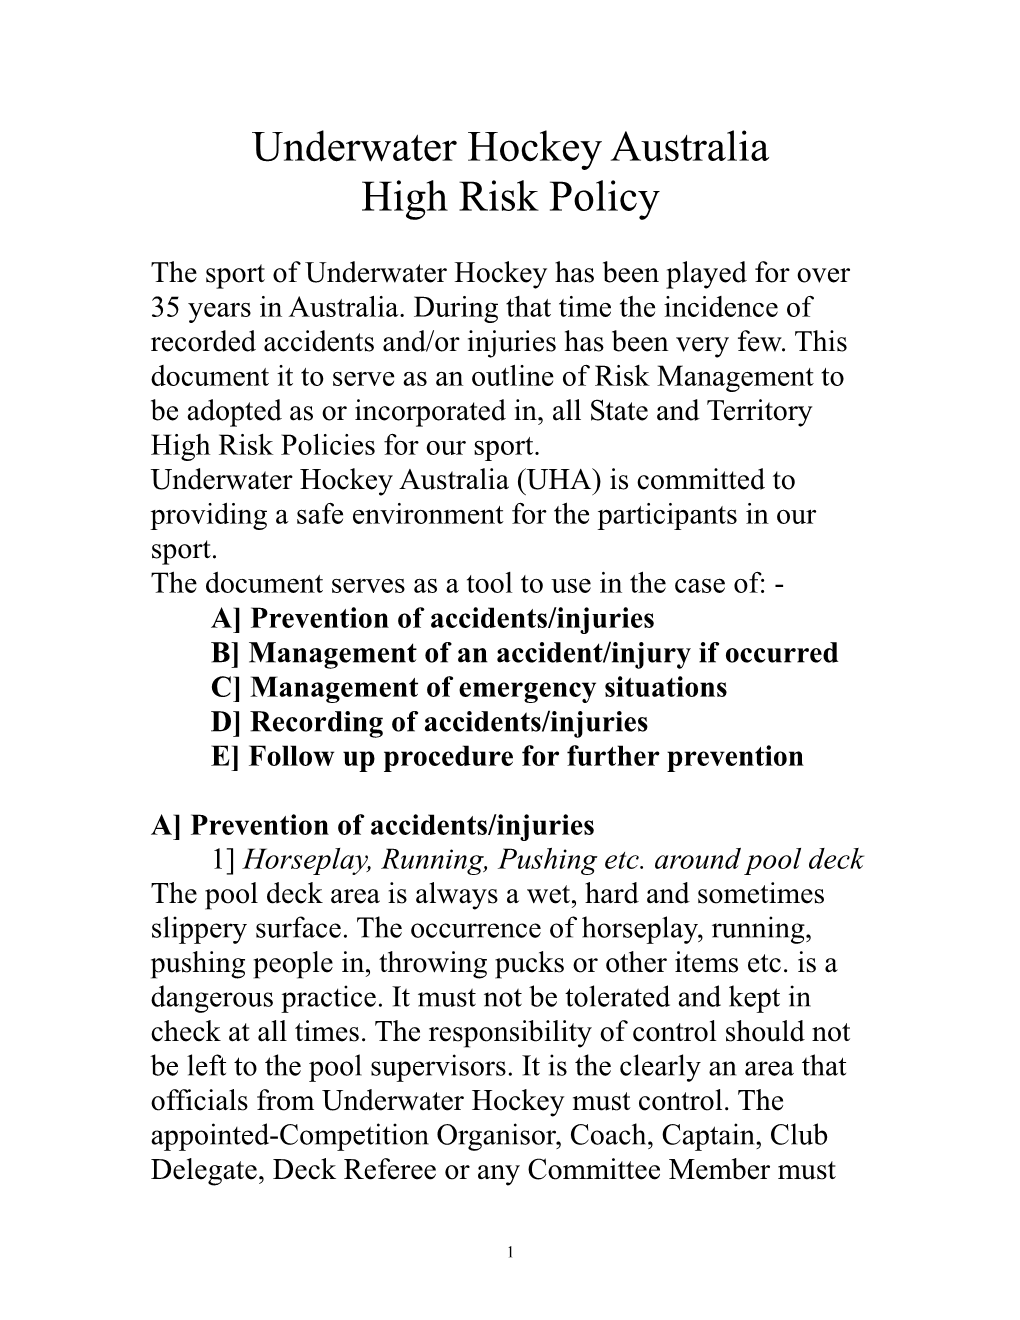 Underwater Hockey Australia High Risk Policy